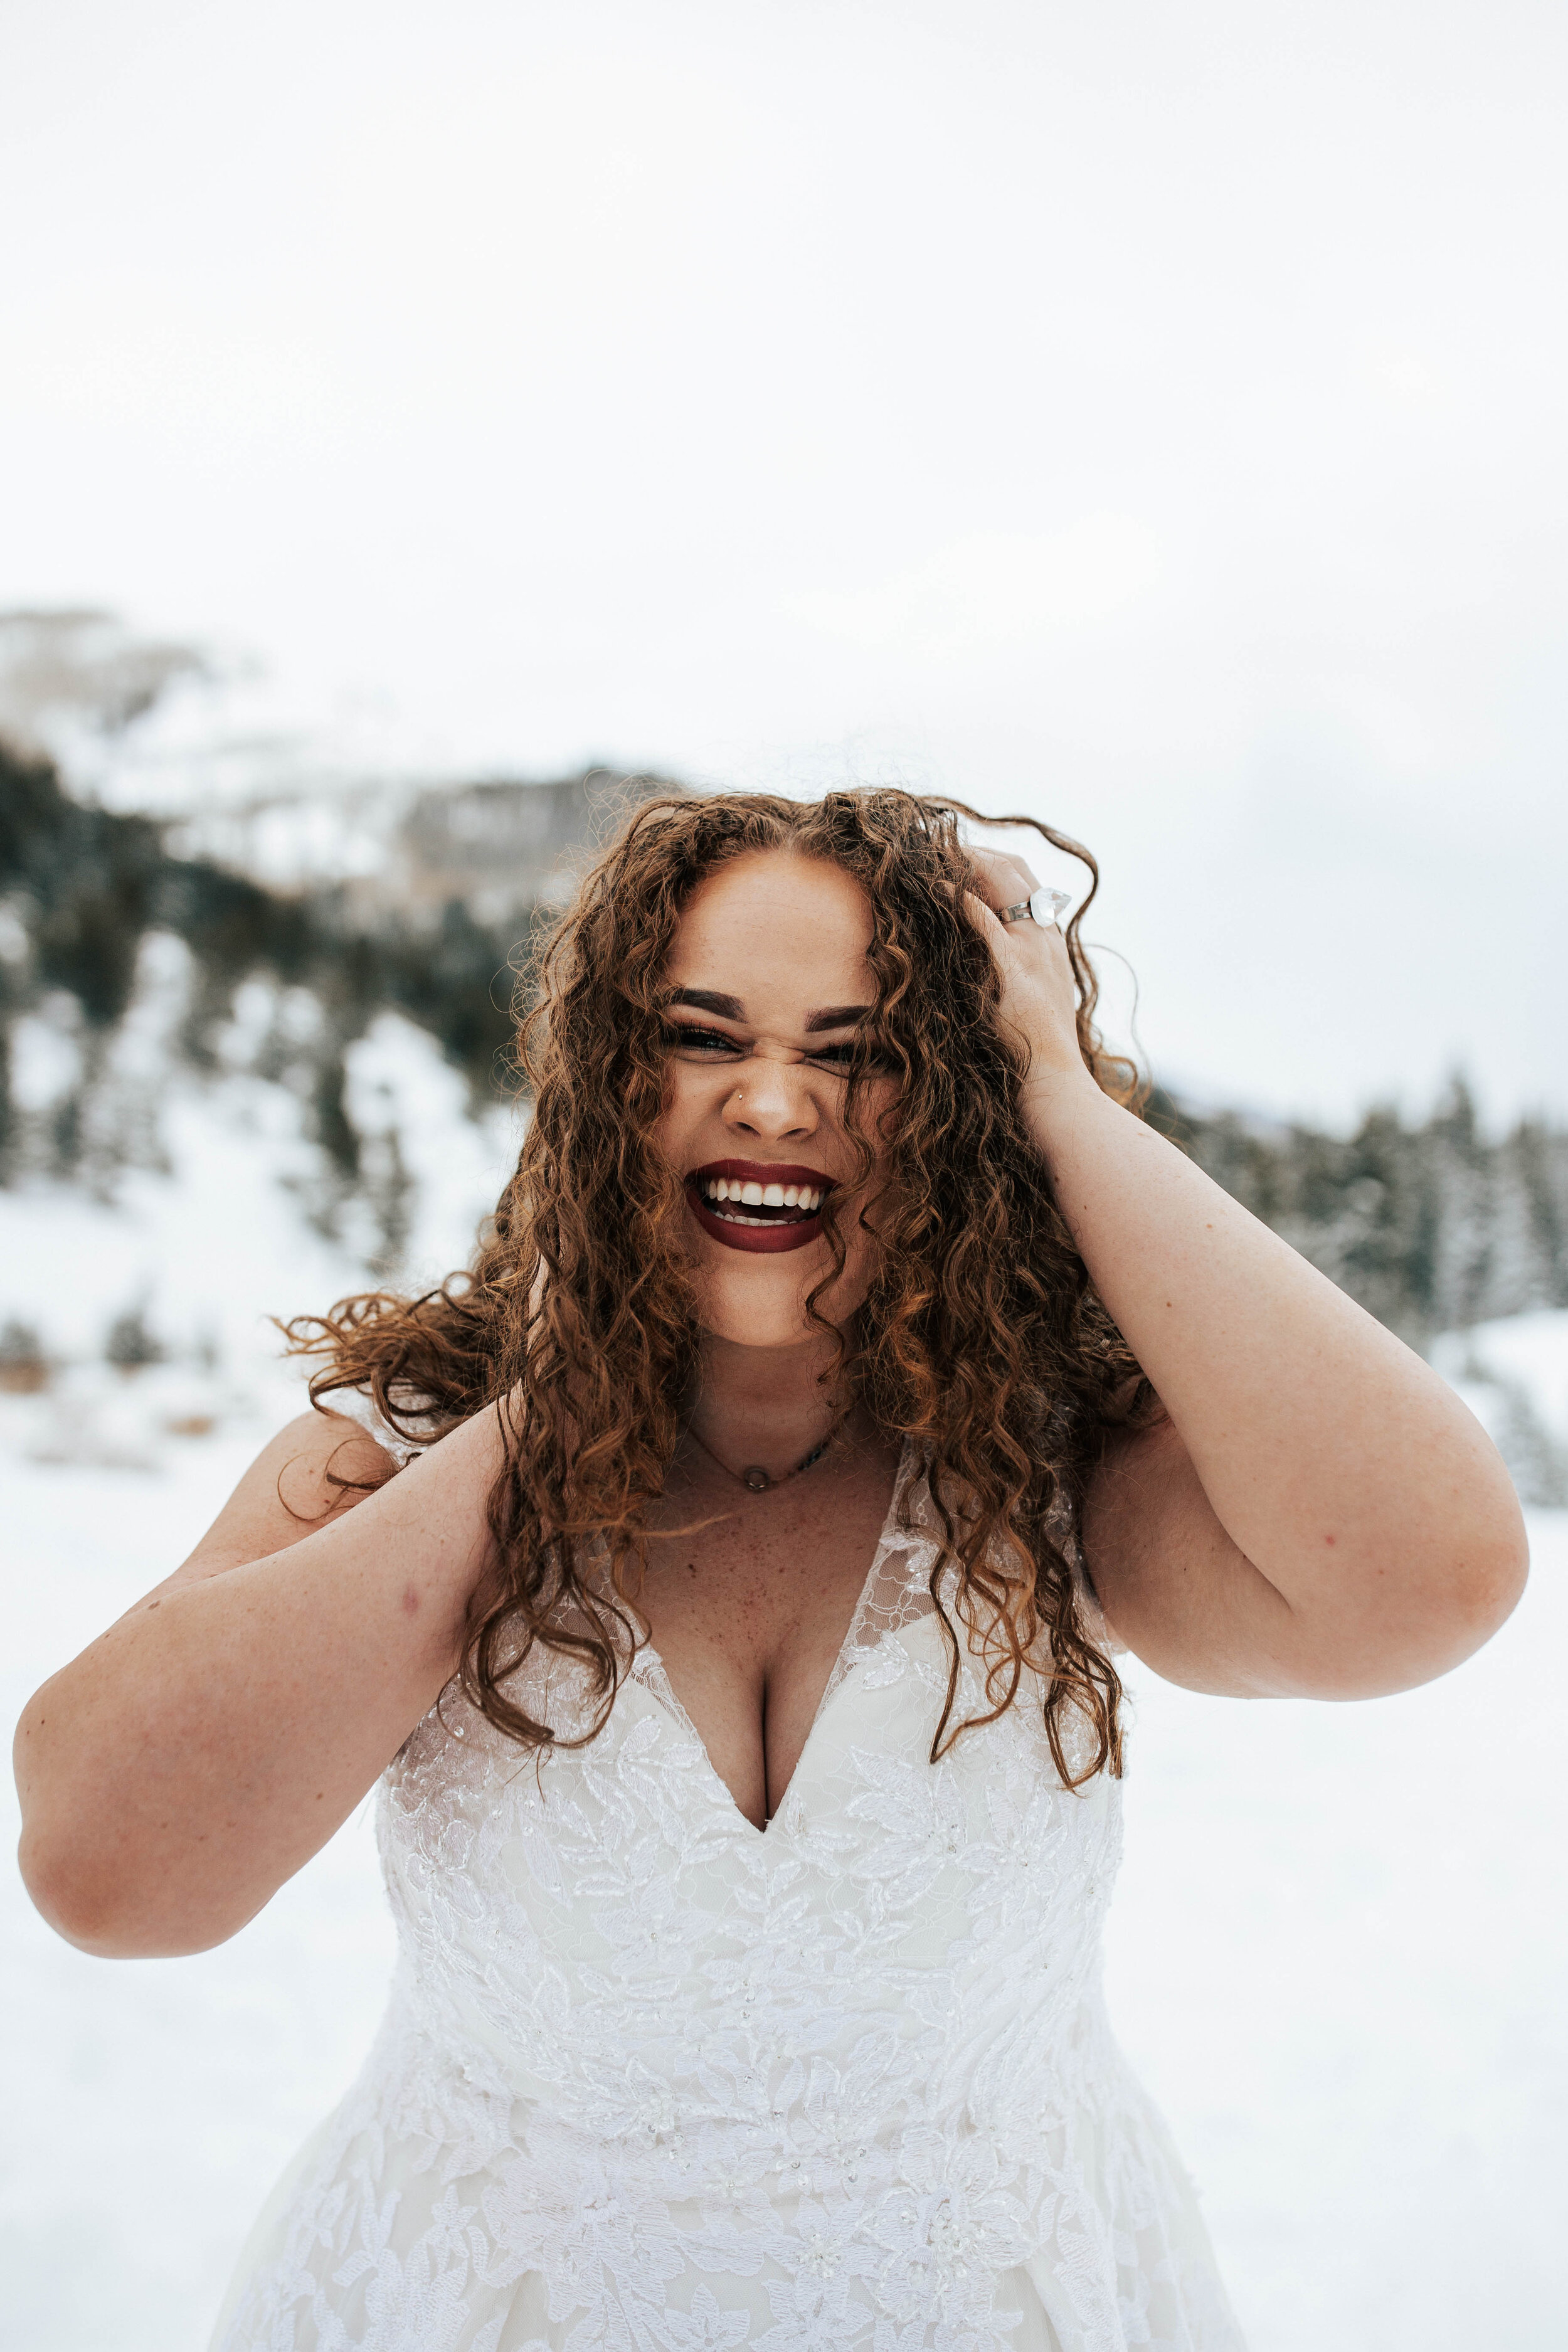 Snowy mountain winter bridals long curly hair big eyes blue florals wedding dress bride #utahphotographer #weddingphotographer #bride #bridals wedding dress